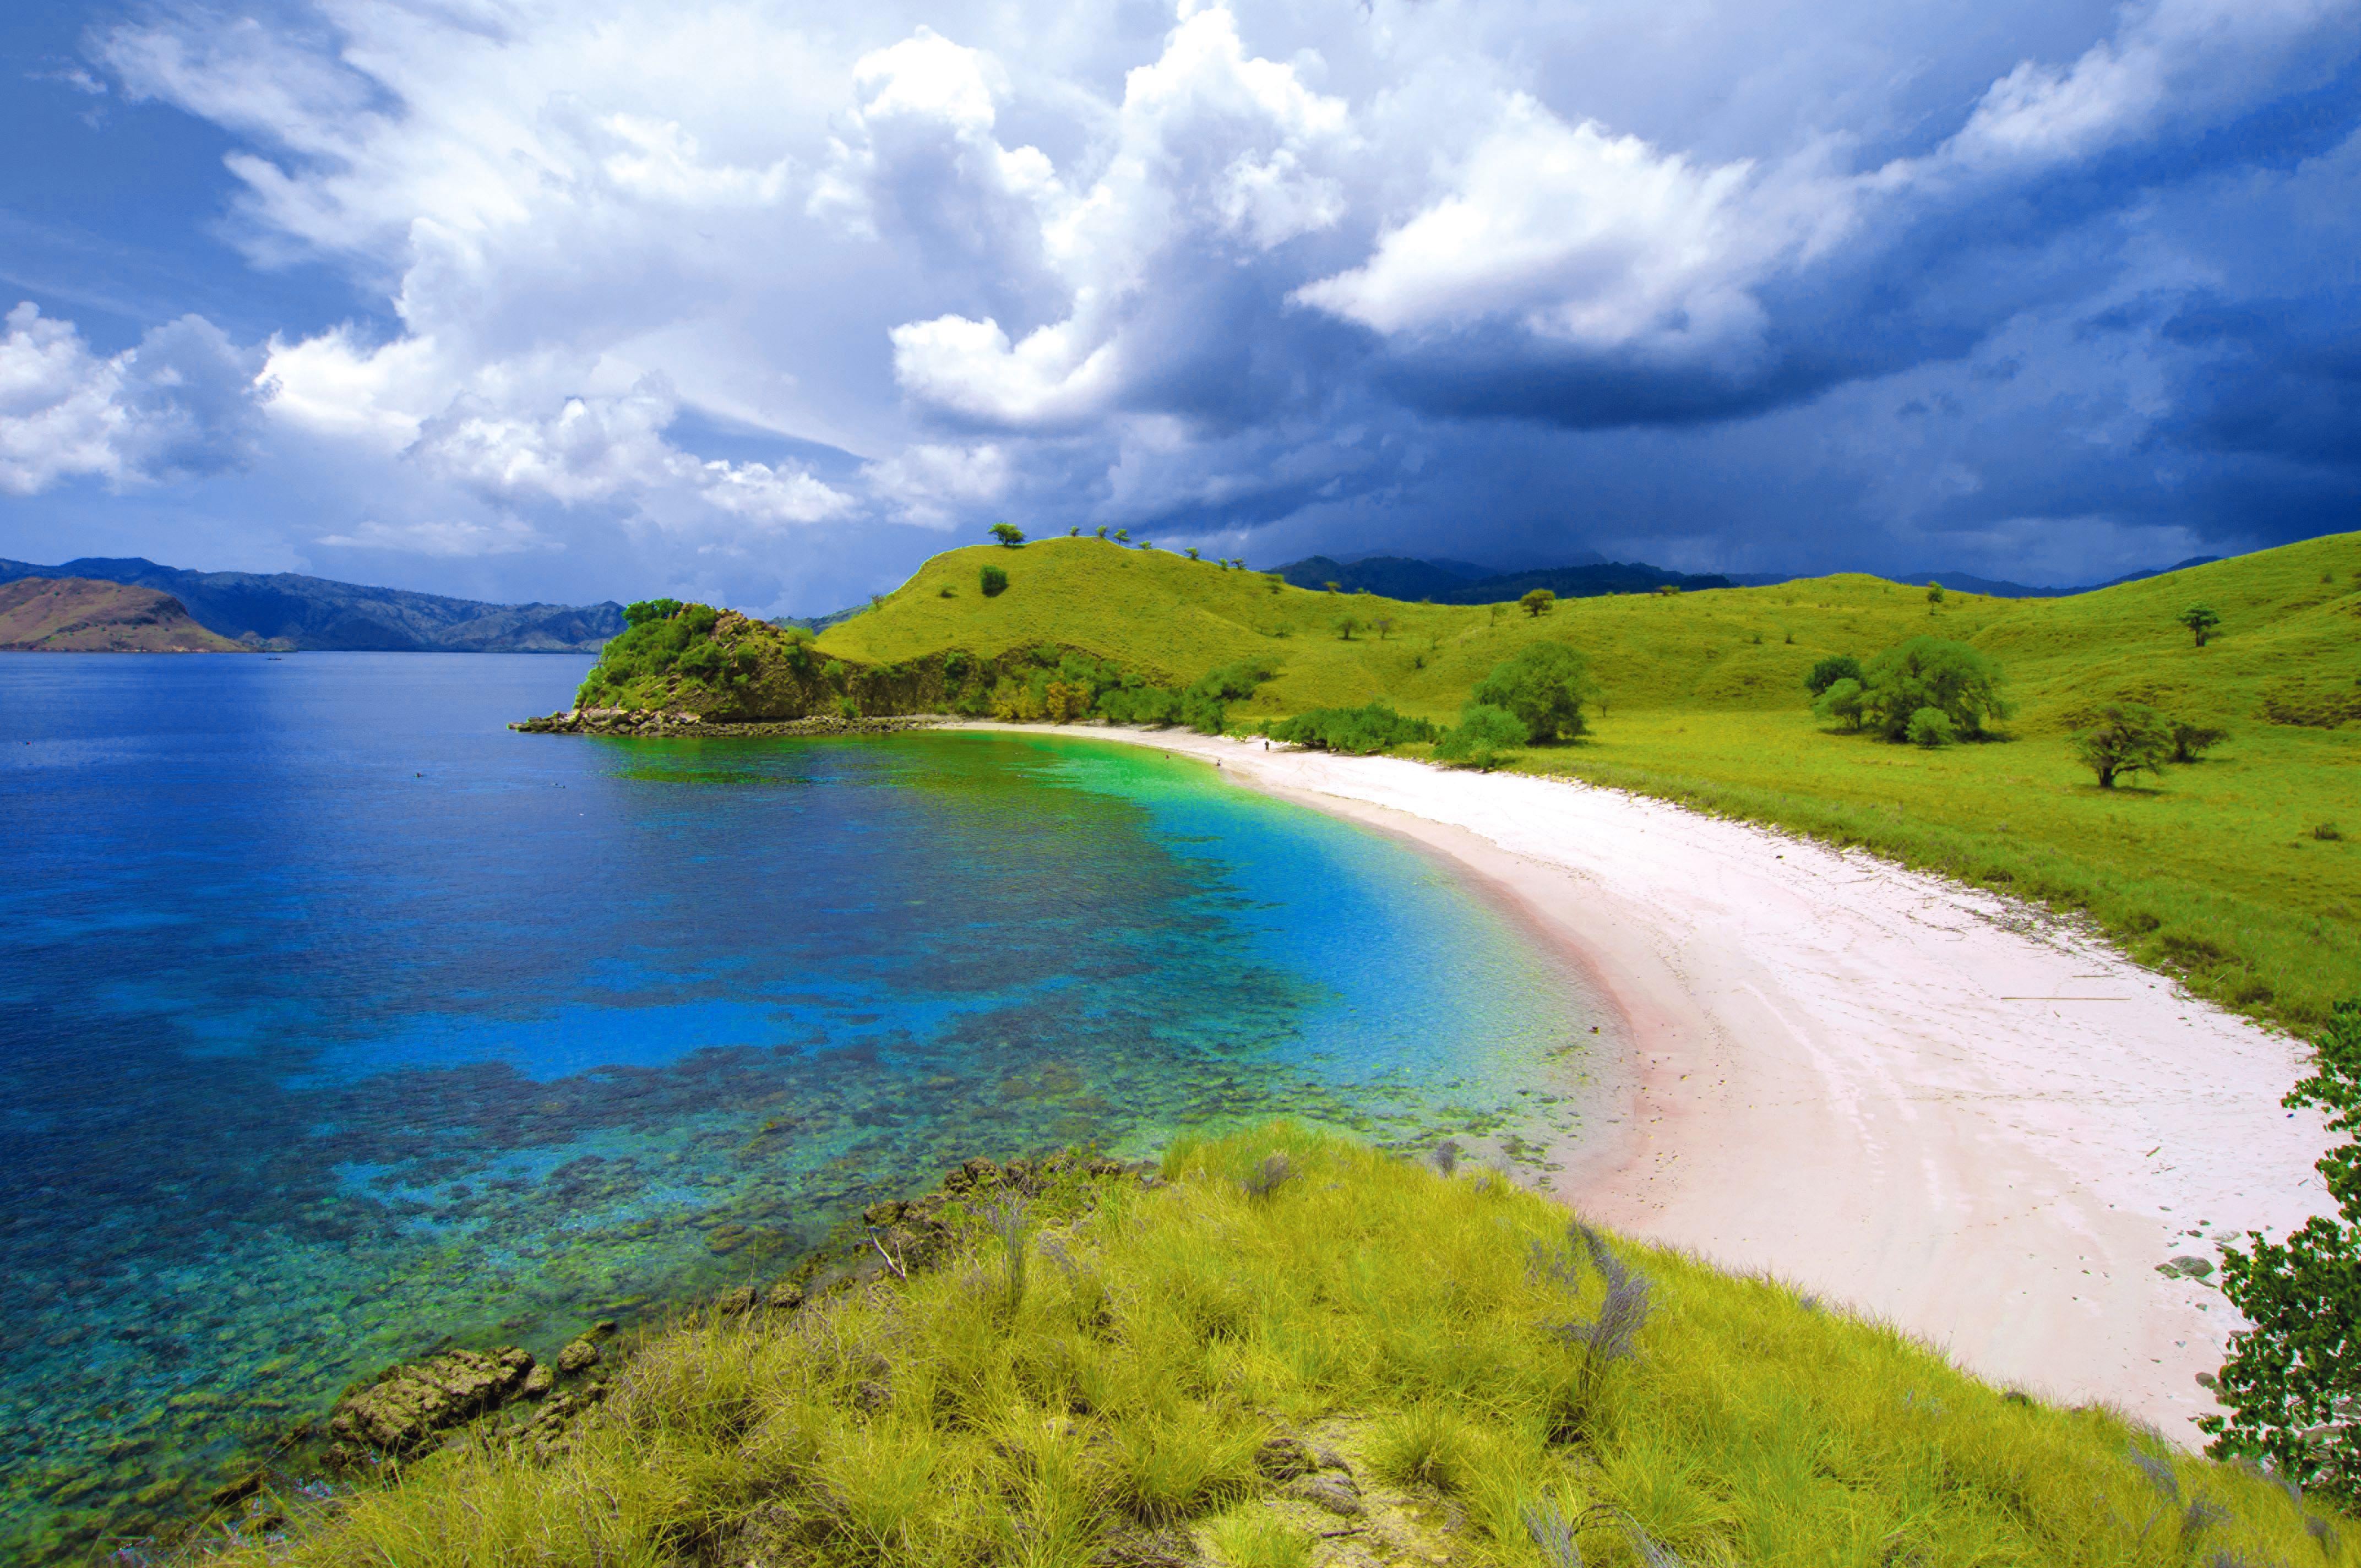 Pink Beach, one of Komodo Island's most popular beaches